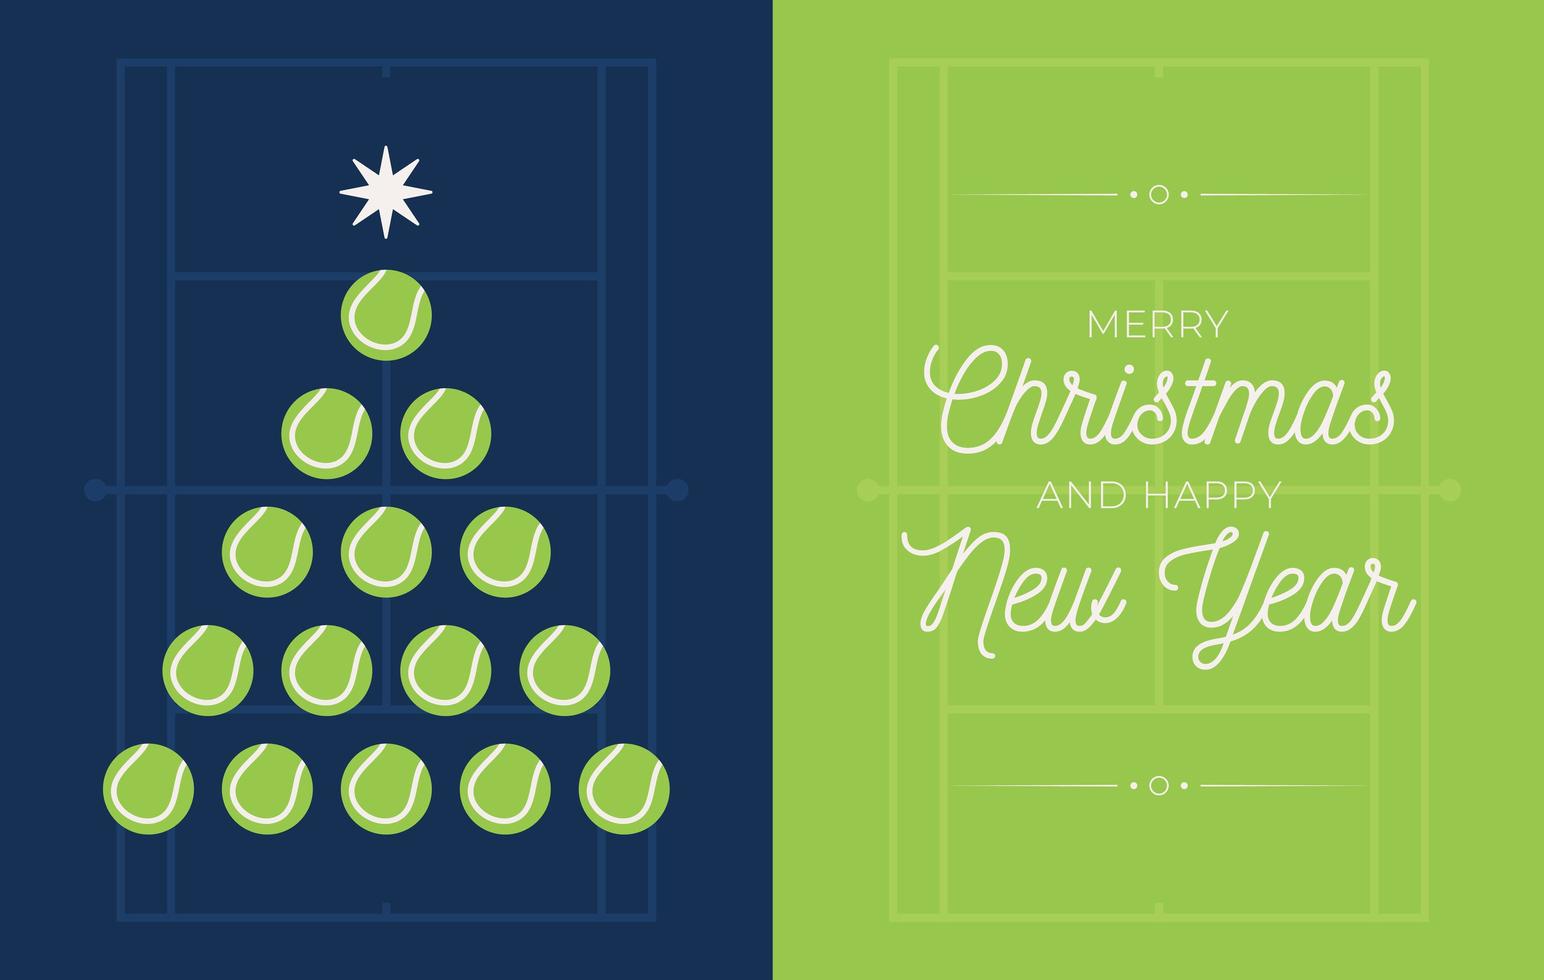 Holiday banner with tennis ball Christmas tree vector